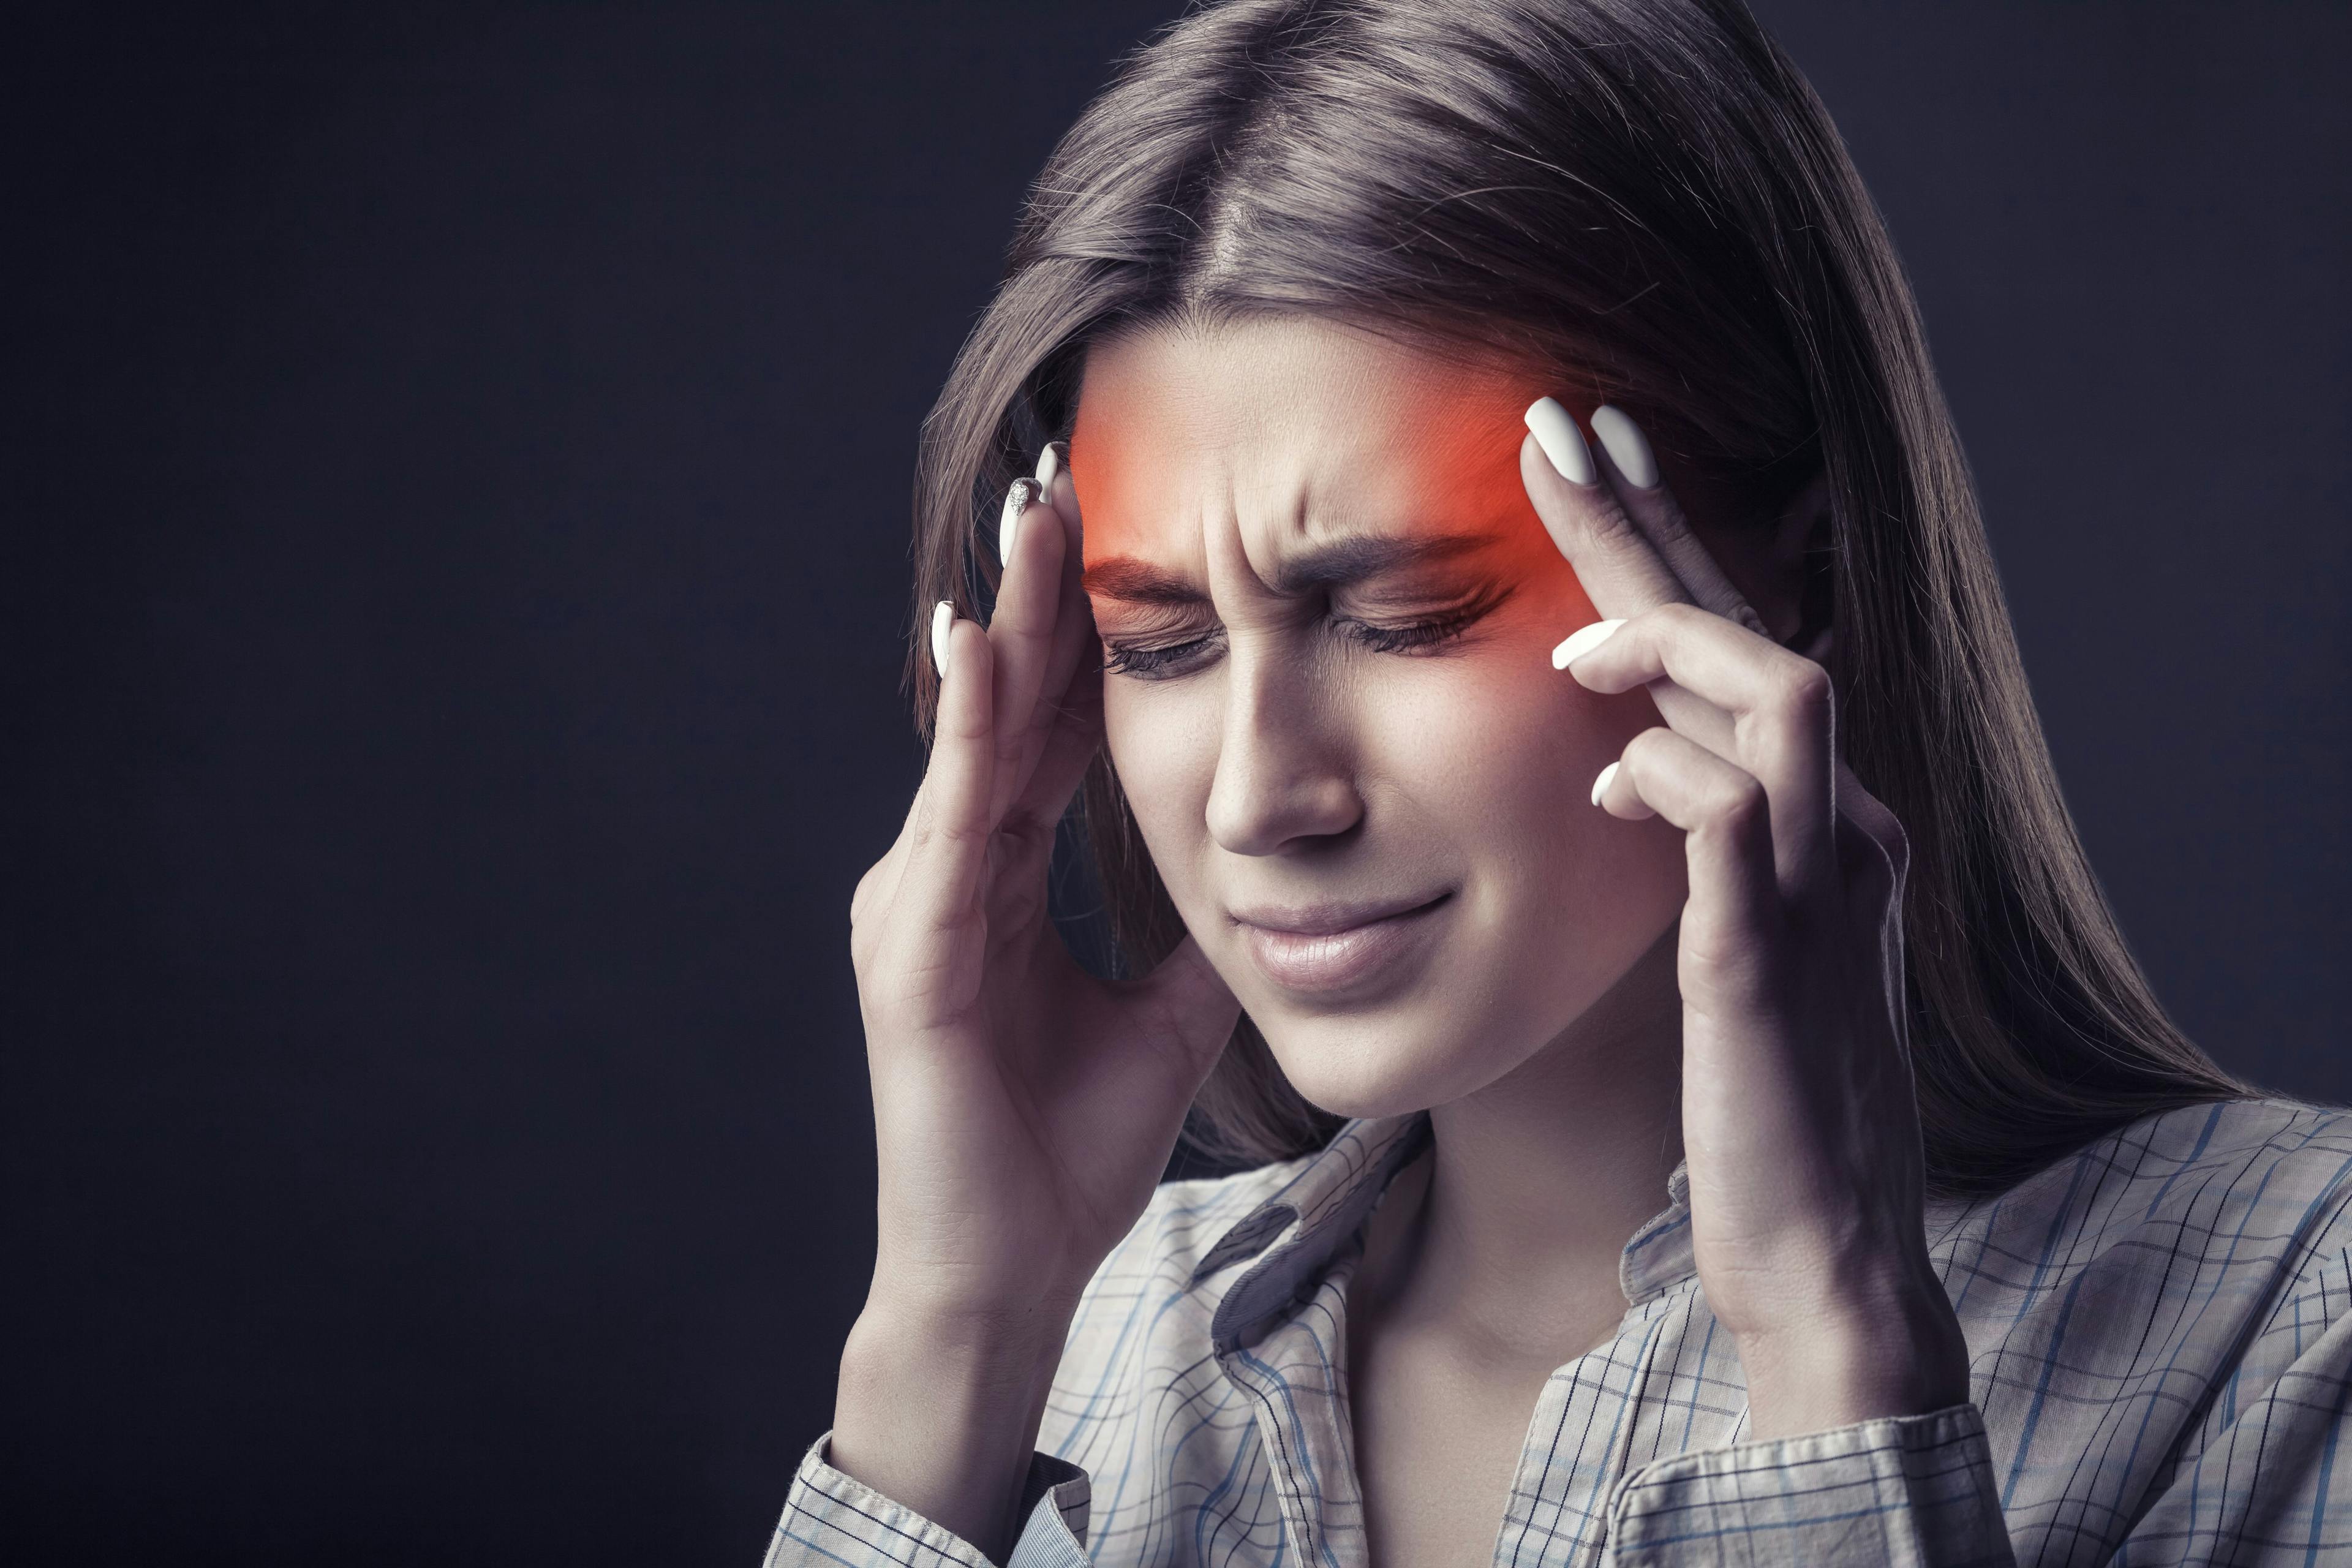 Female patient with headache pain | Image Credit: Artem Furman - stock.adobe.com